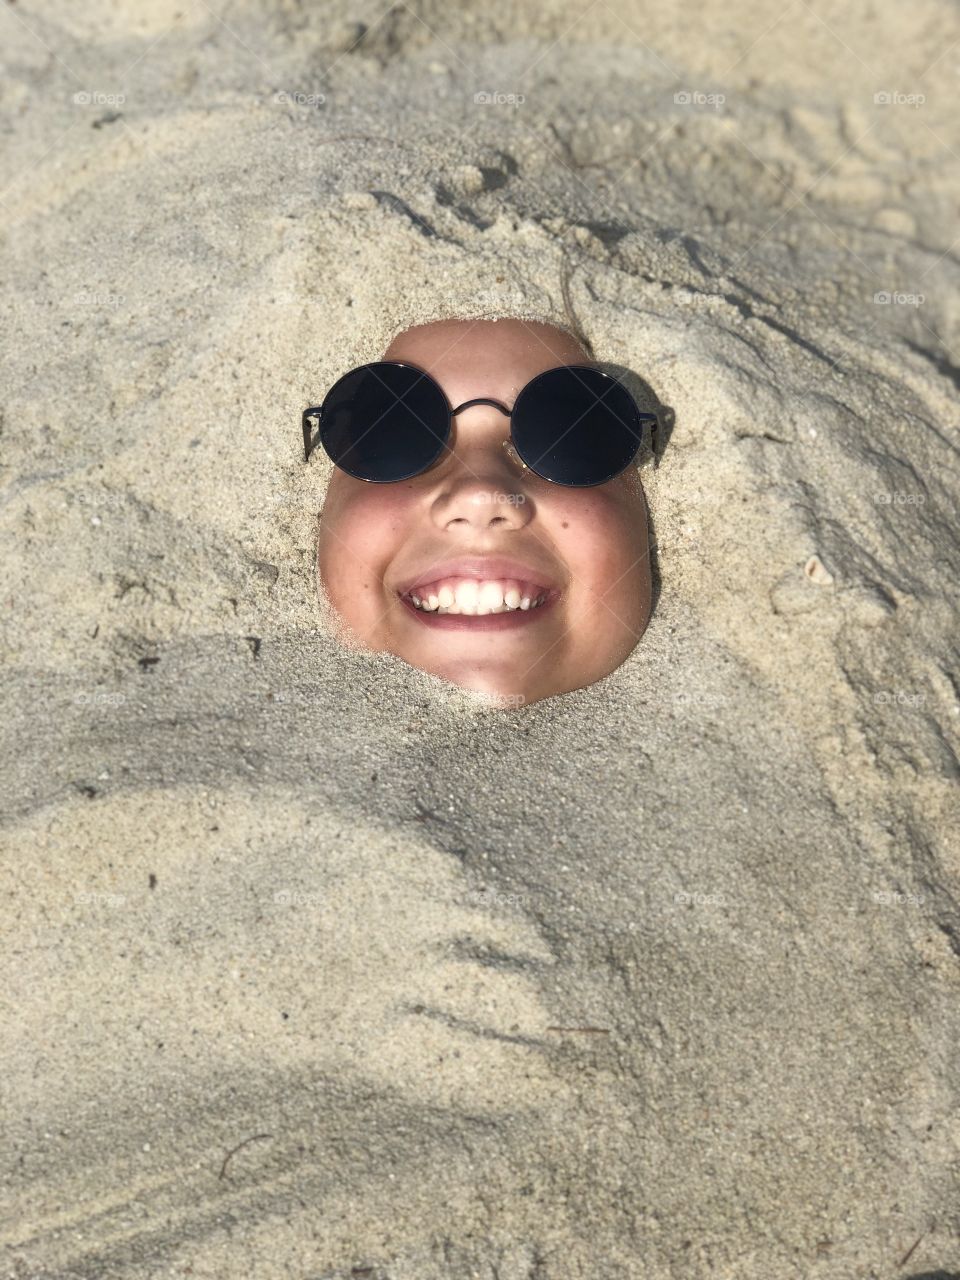 Summer fun in the sand